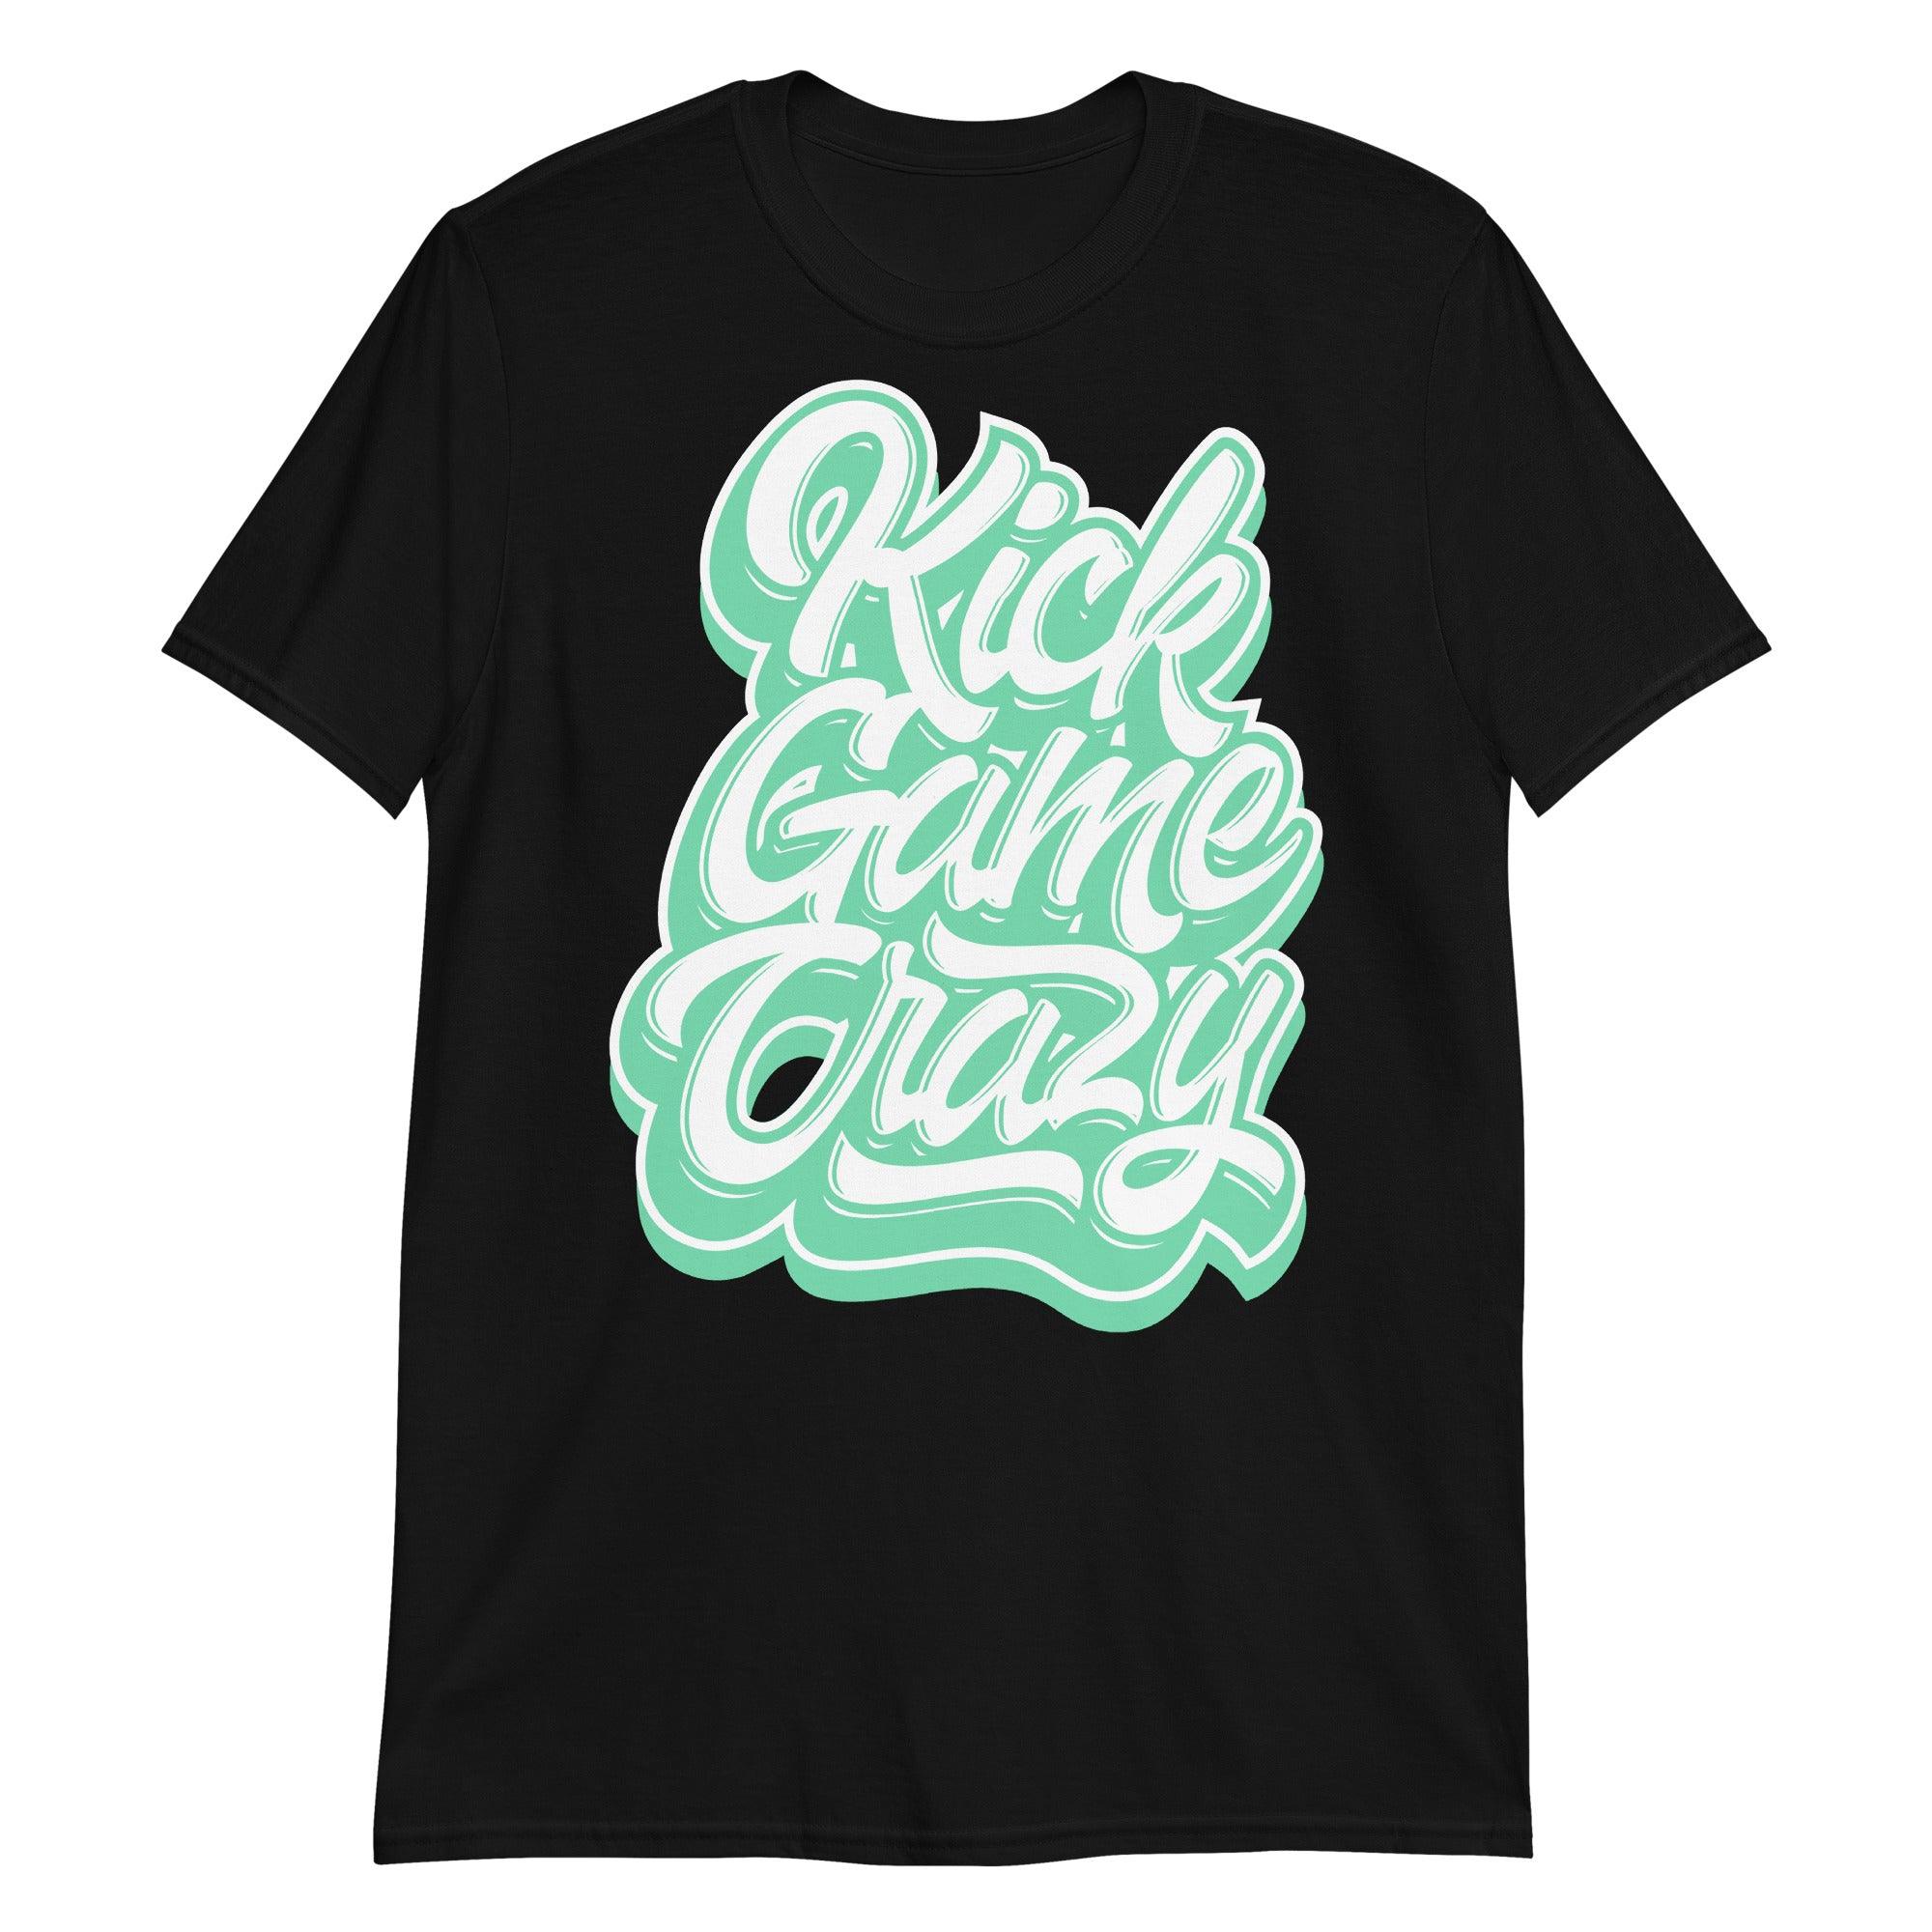 Black Kick Game Crazy Shirt Nike Dunk Low Green Glow photo